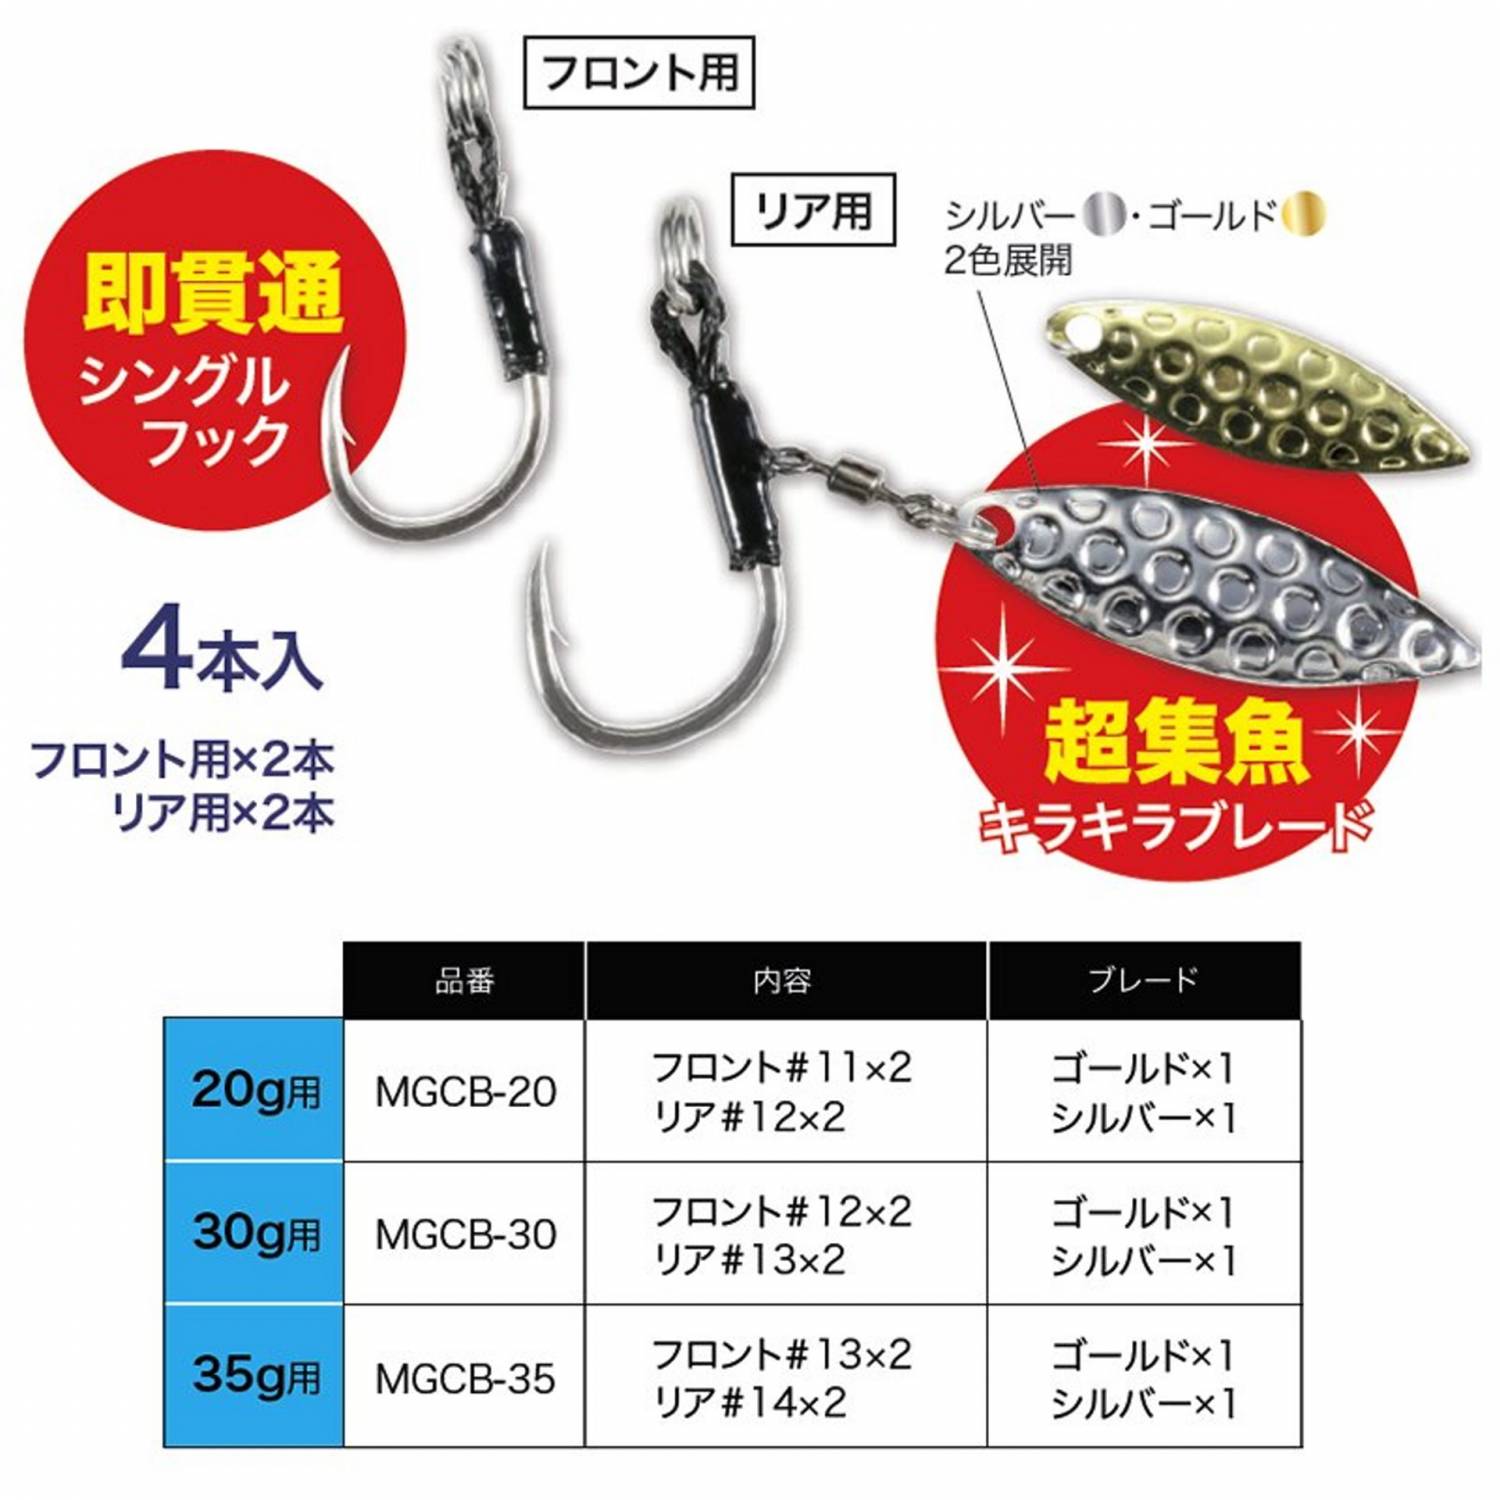 DUO Metal Garage Blade Hook Single Set MGCB (Assist Hook) 35g Hooks, Sinkers,  Other buy at